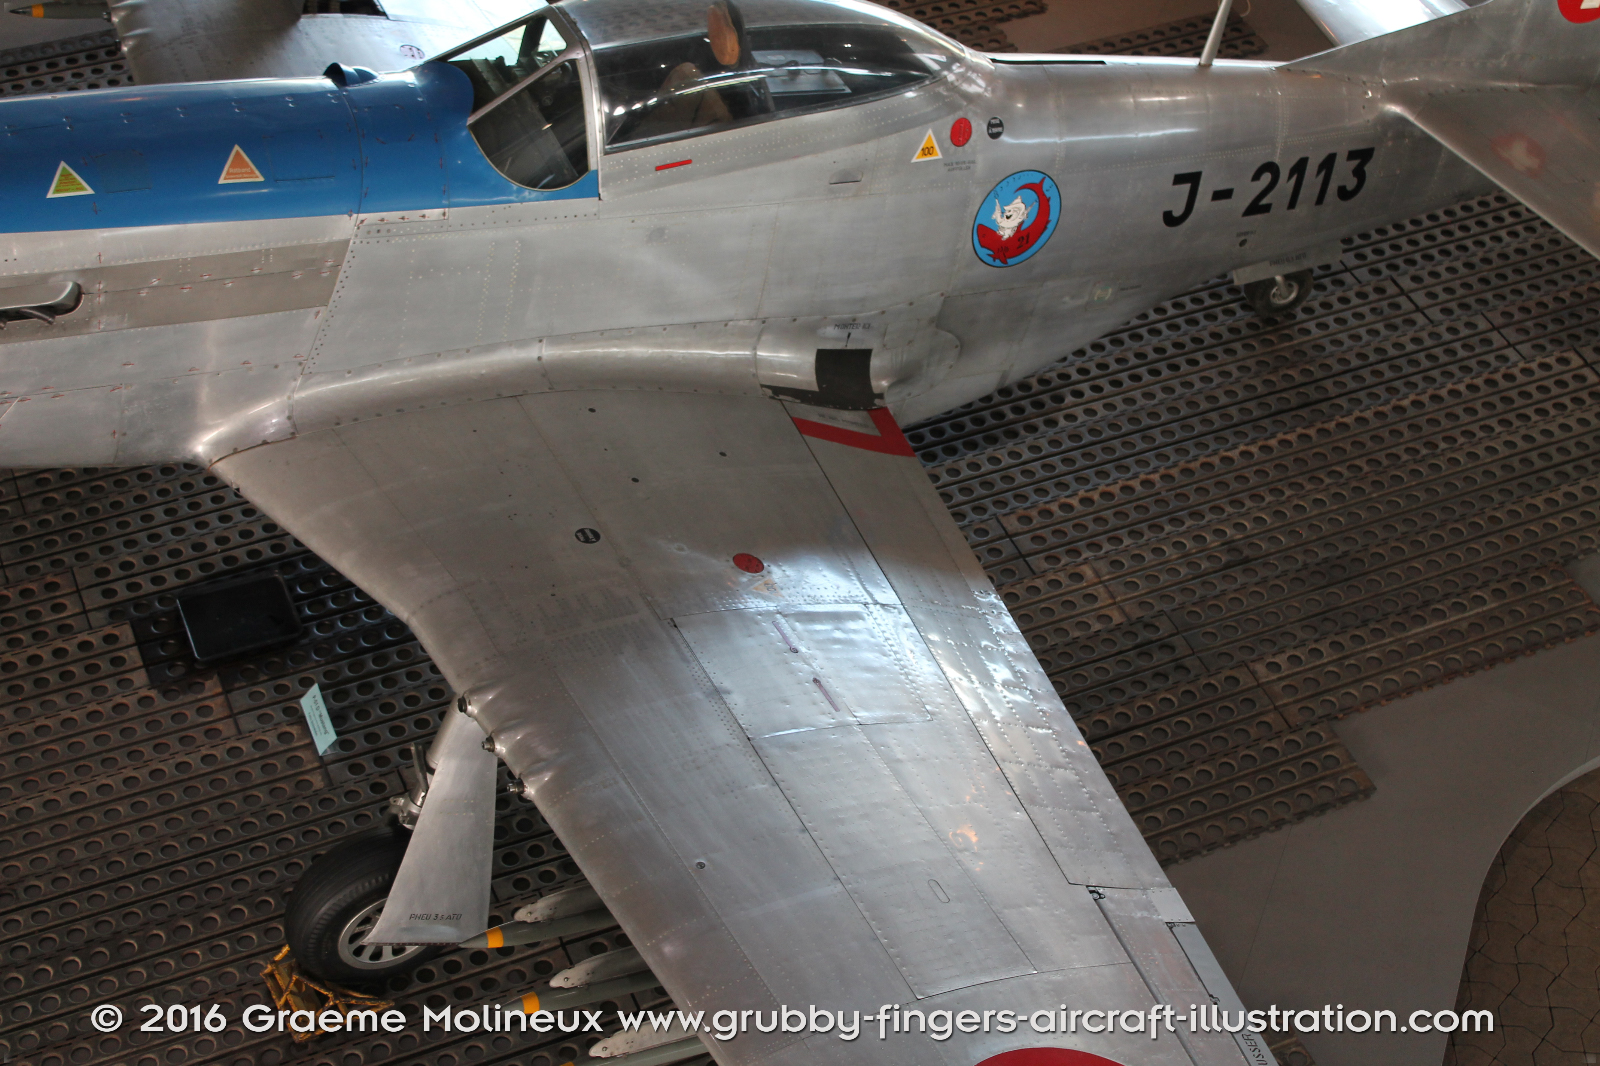 NORTH_AMERICAN_P-51D_Mustang_Walkaround_J-2113_Swiss_Air_Force_Museum_2015_05_GrubbyFingers